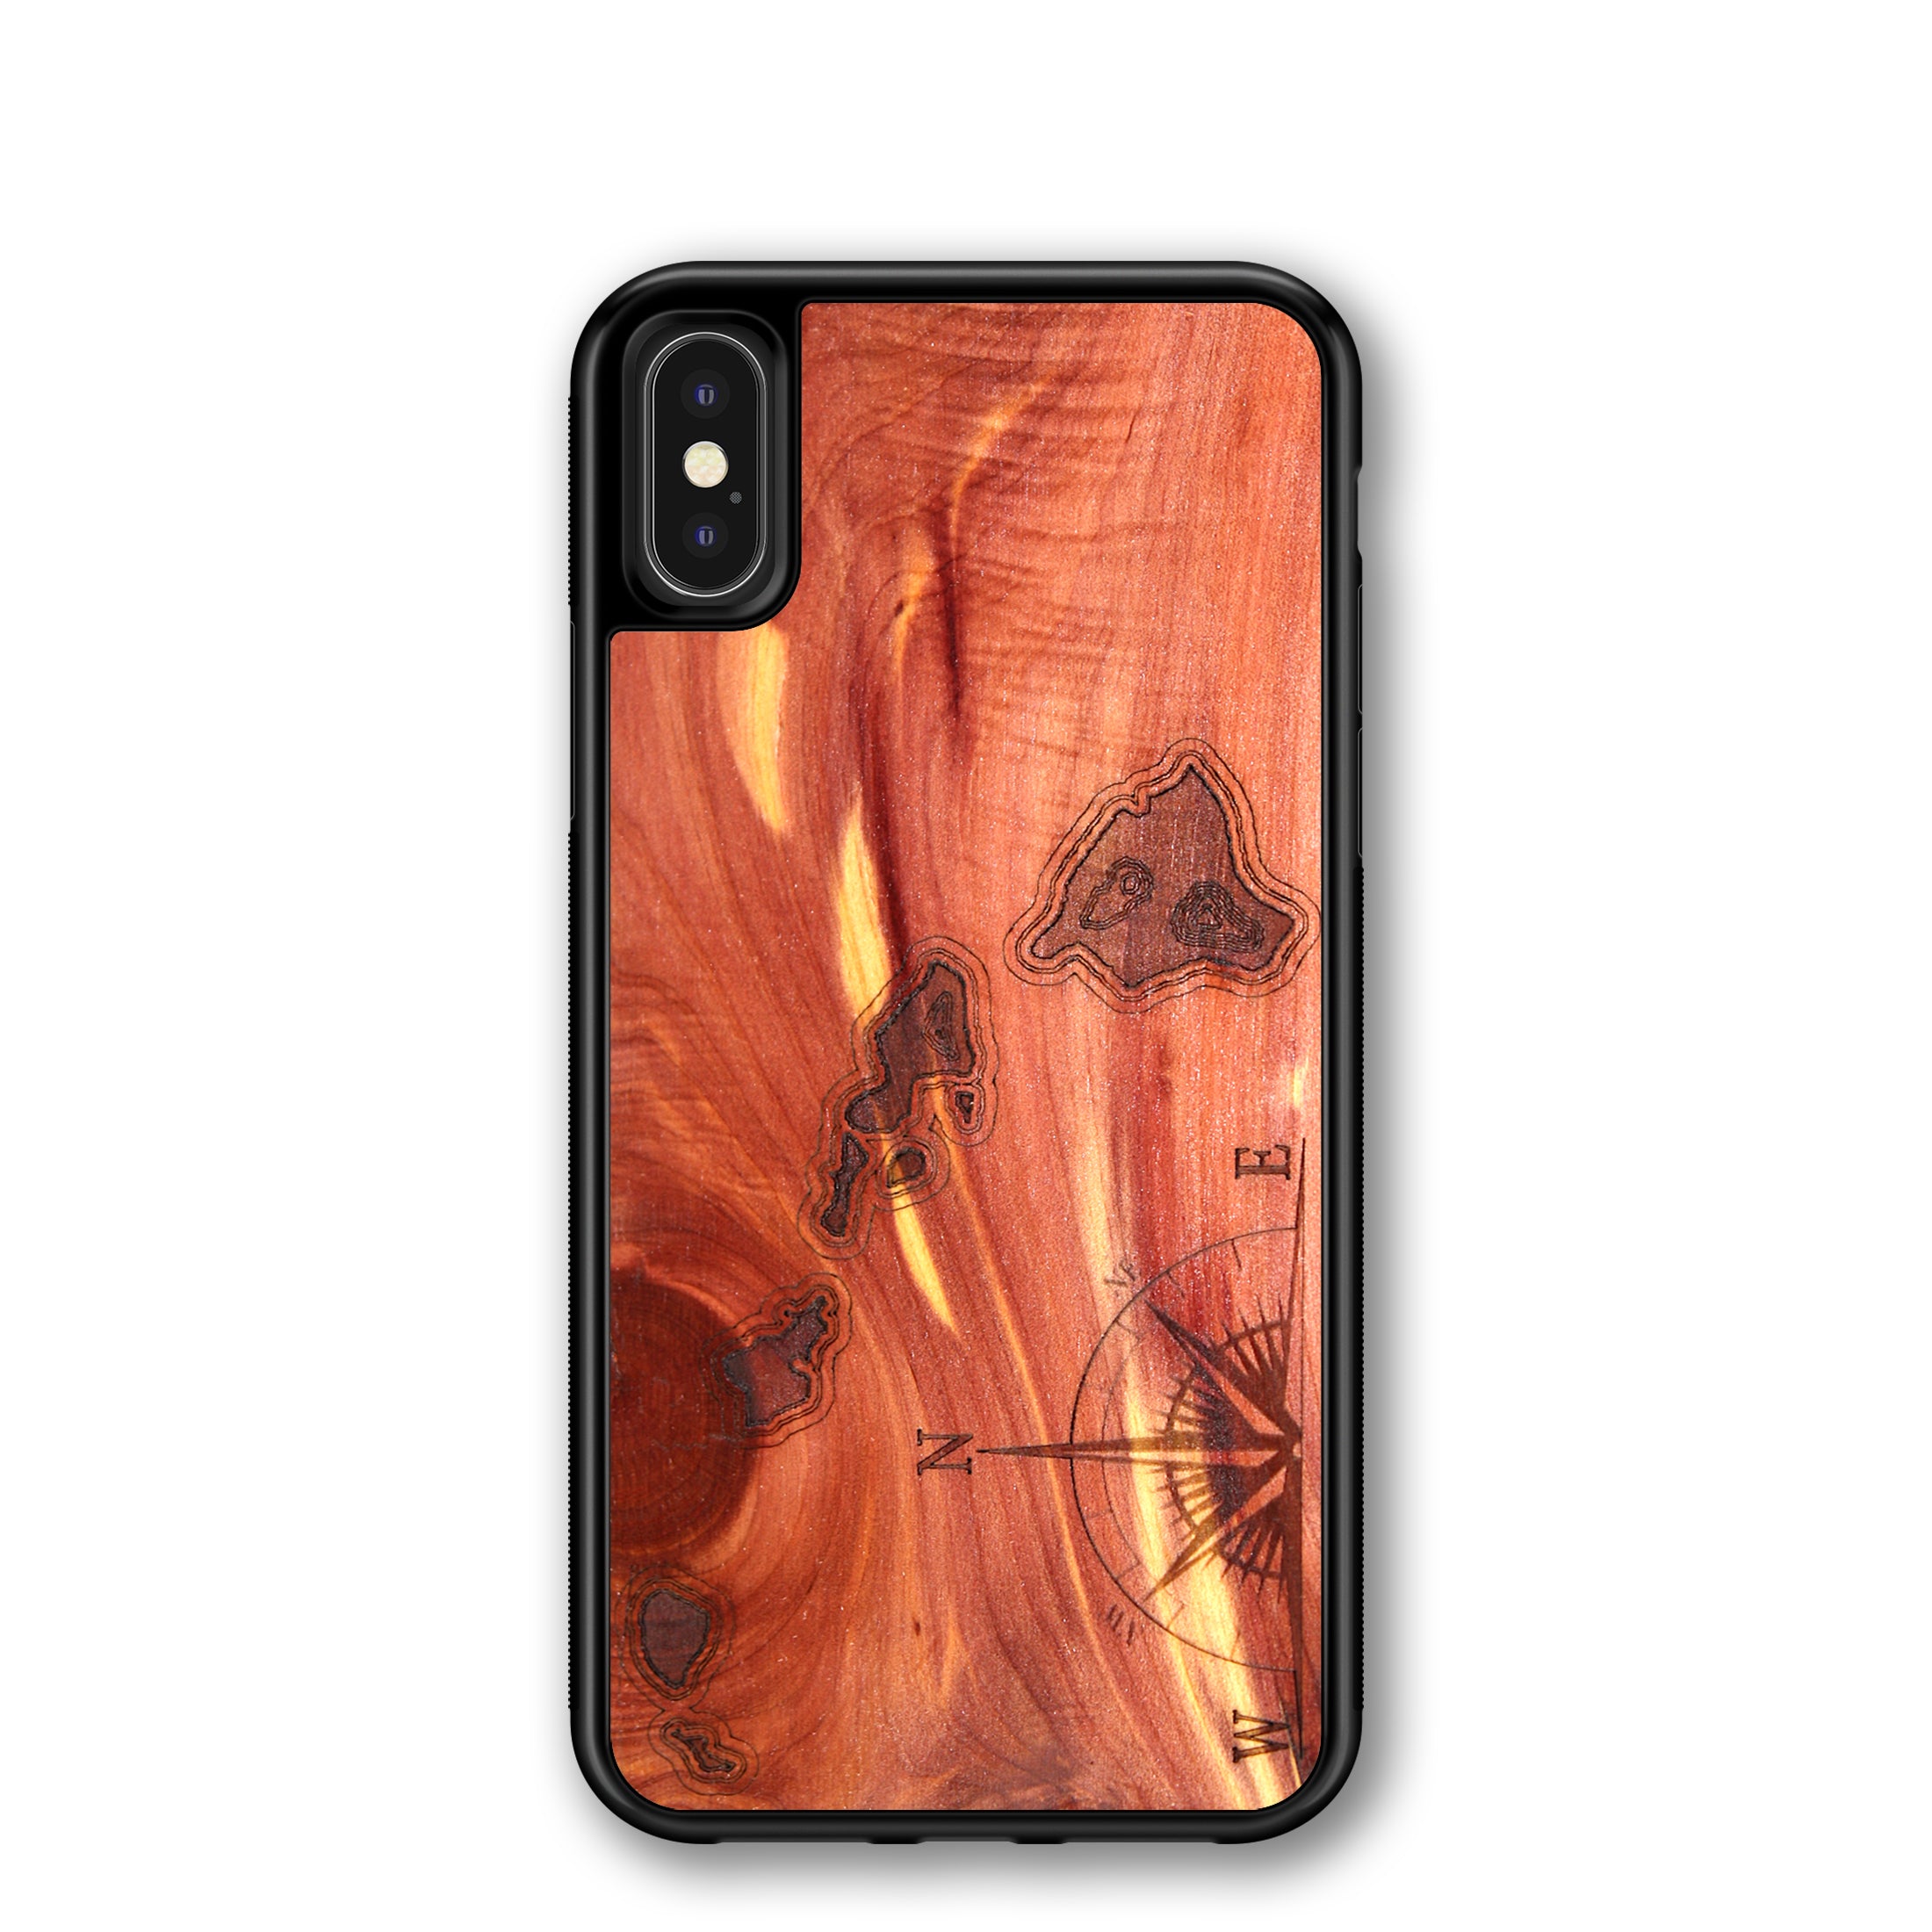 Slim Wooden iPhone Case (Hawaiian Islands in Aromatic Cedar)